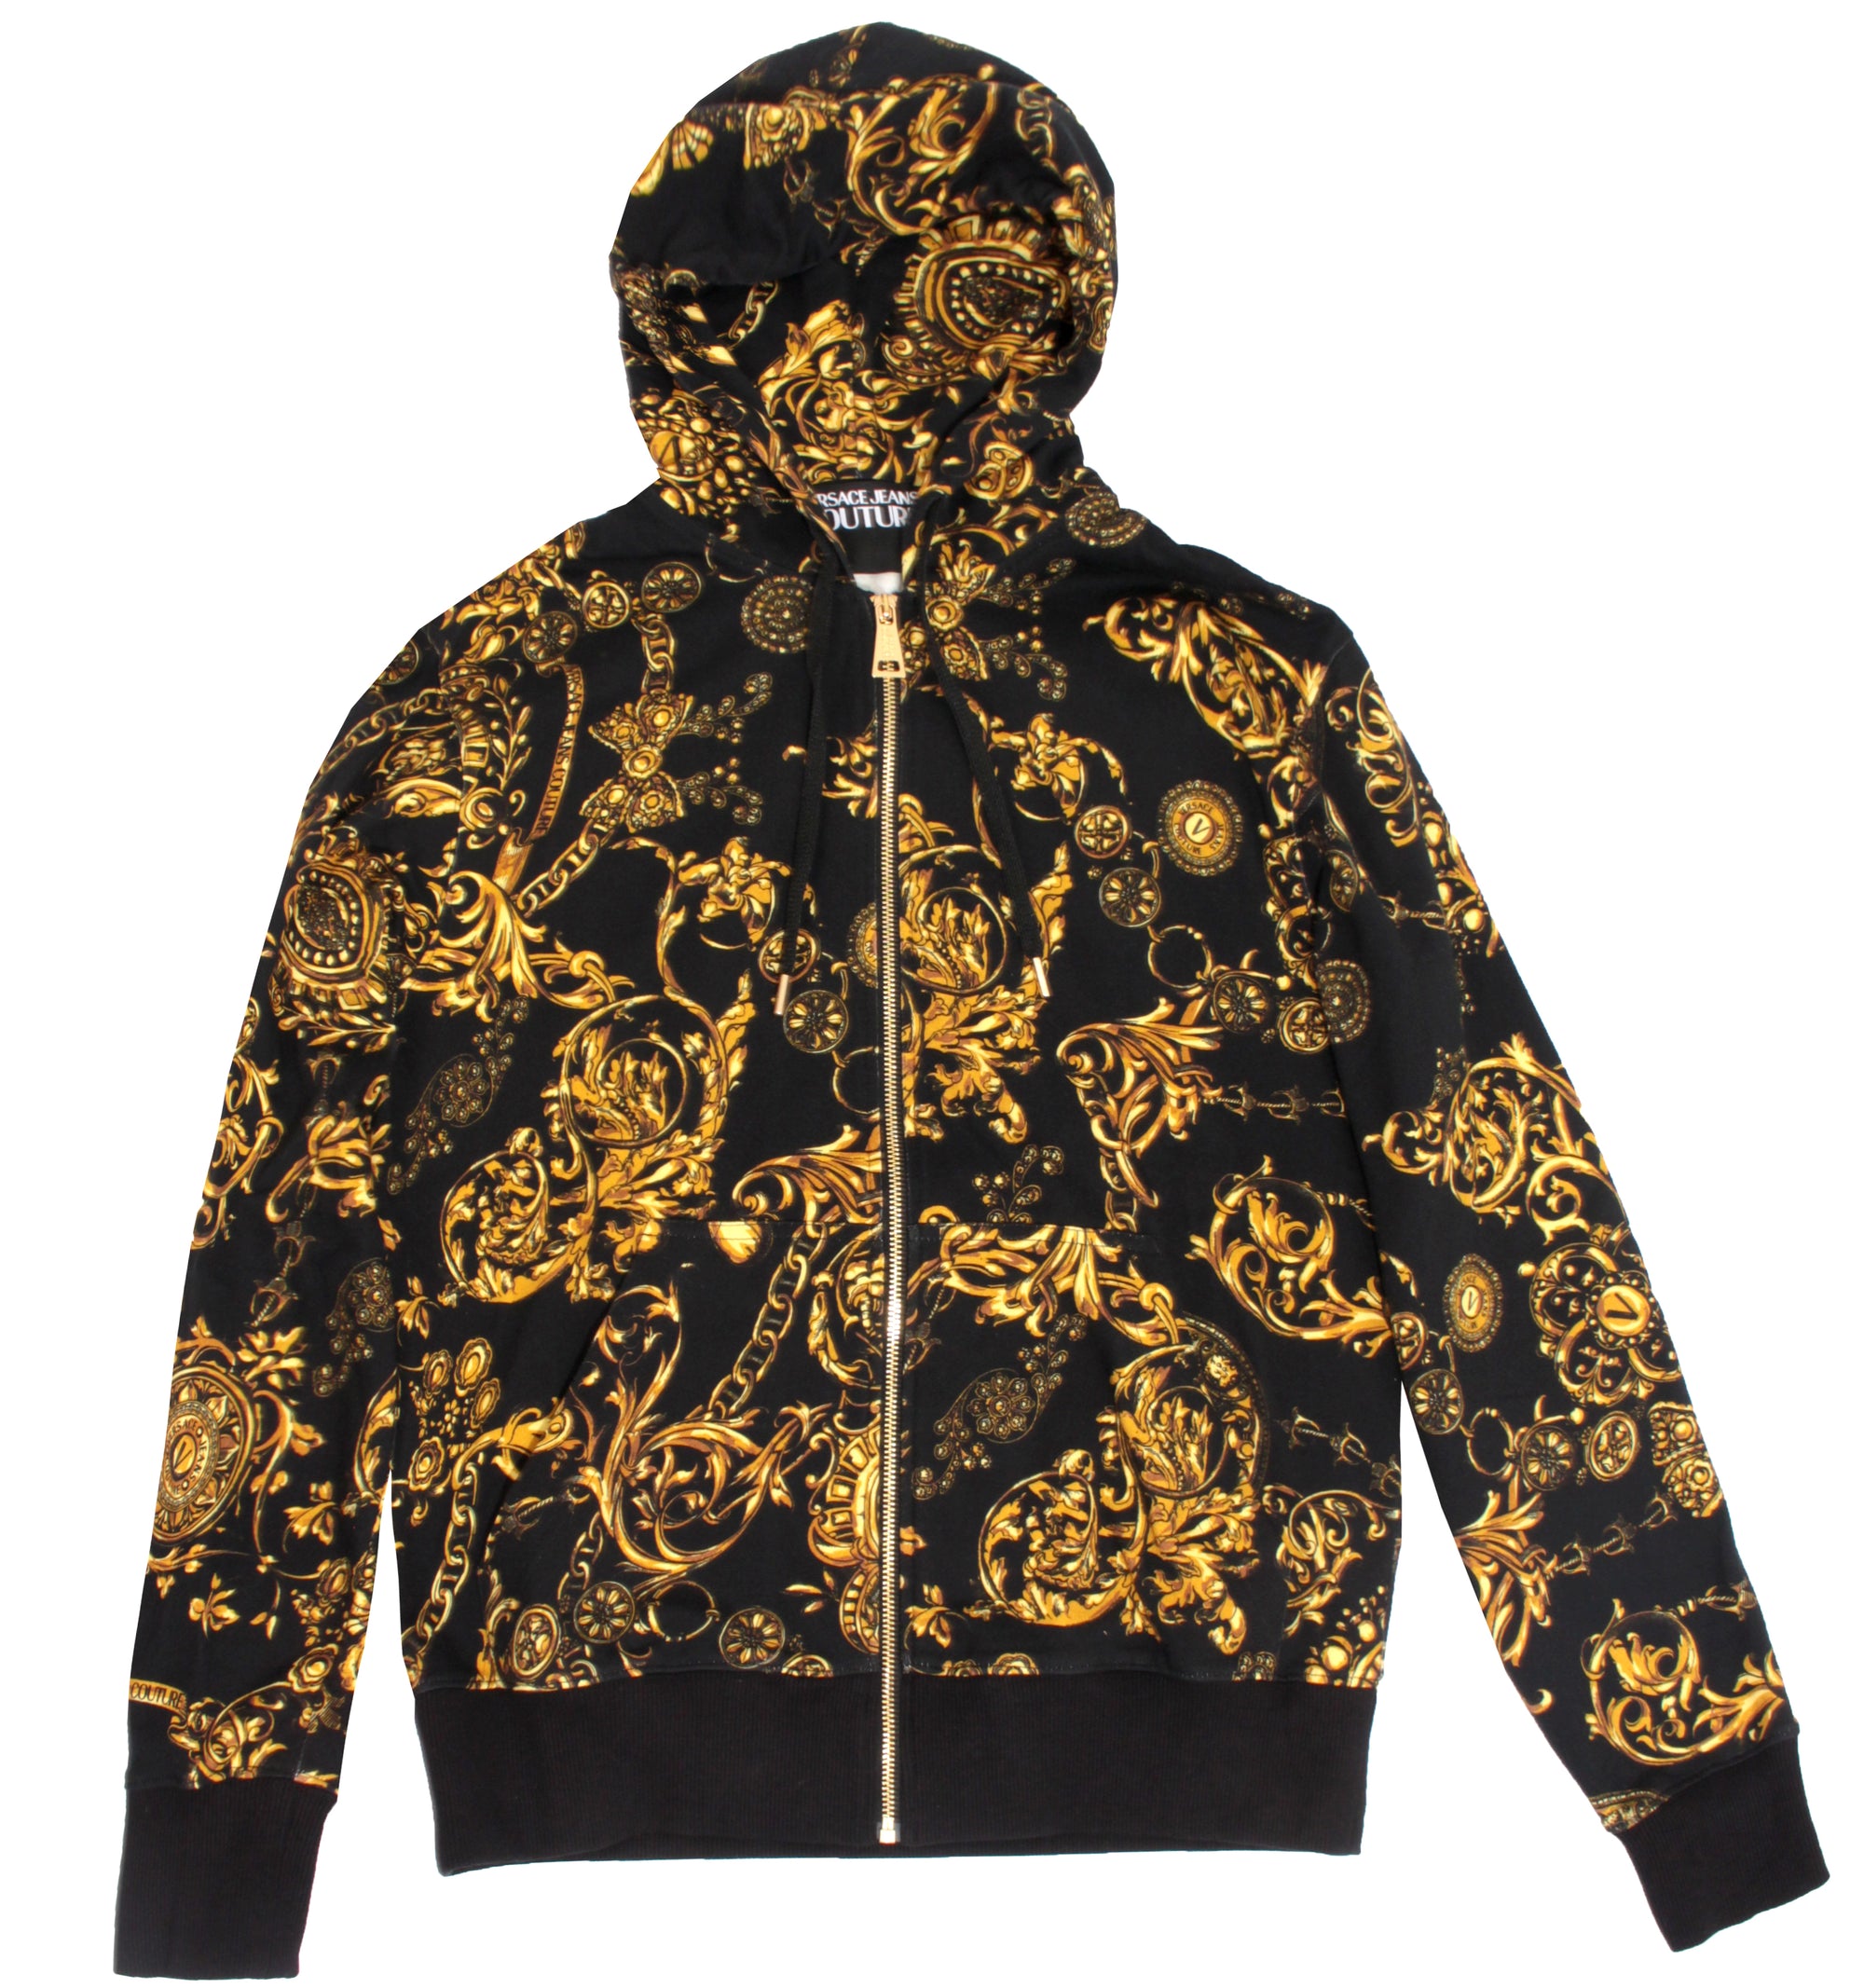 All Over Baroque Print Jacket - Black & Gold